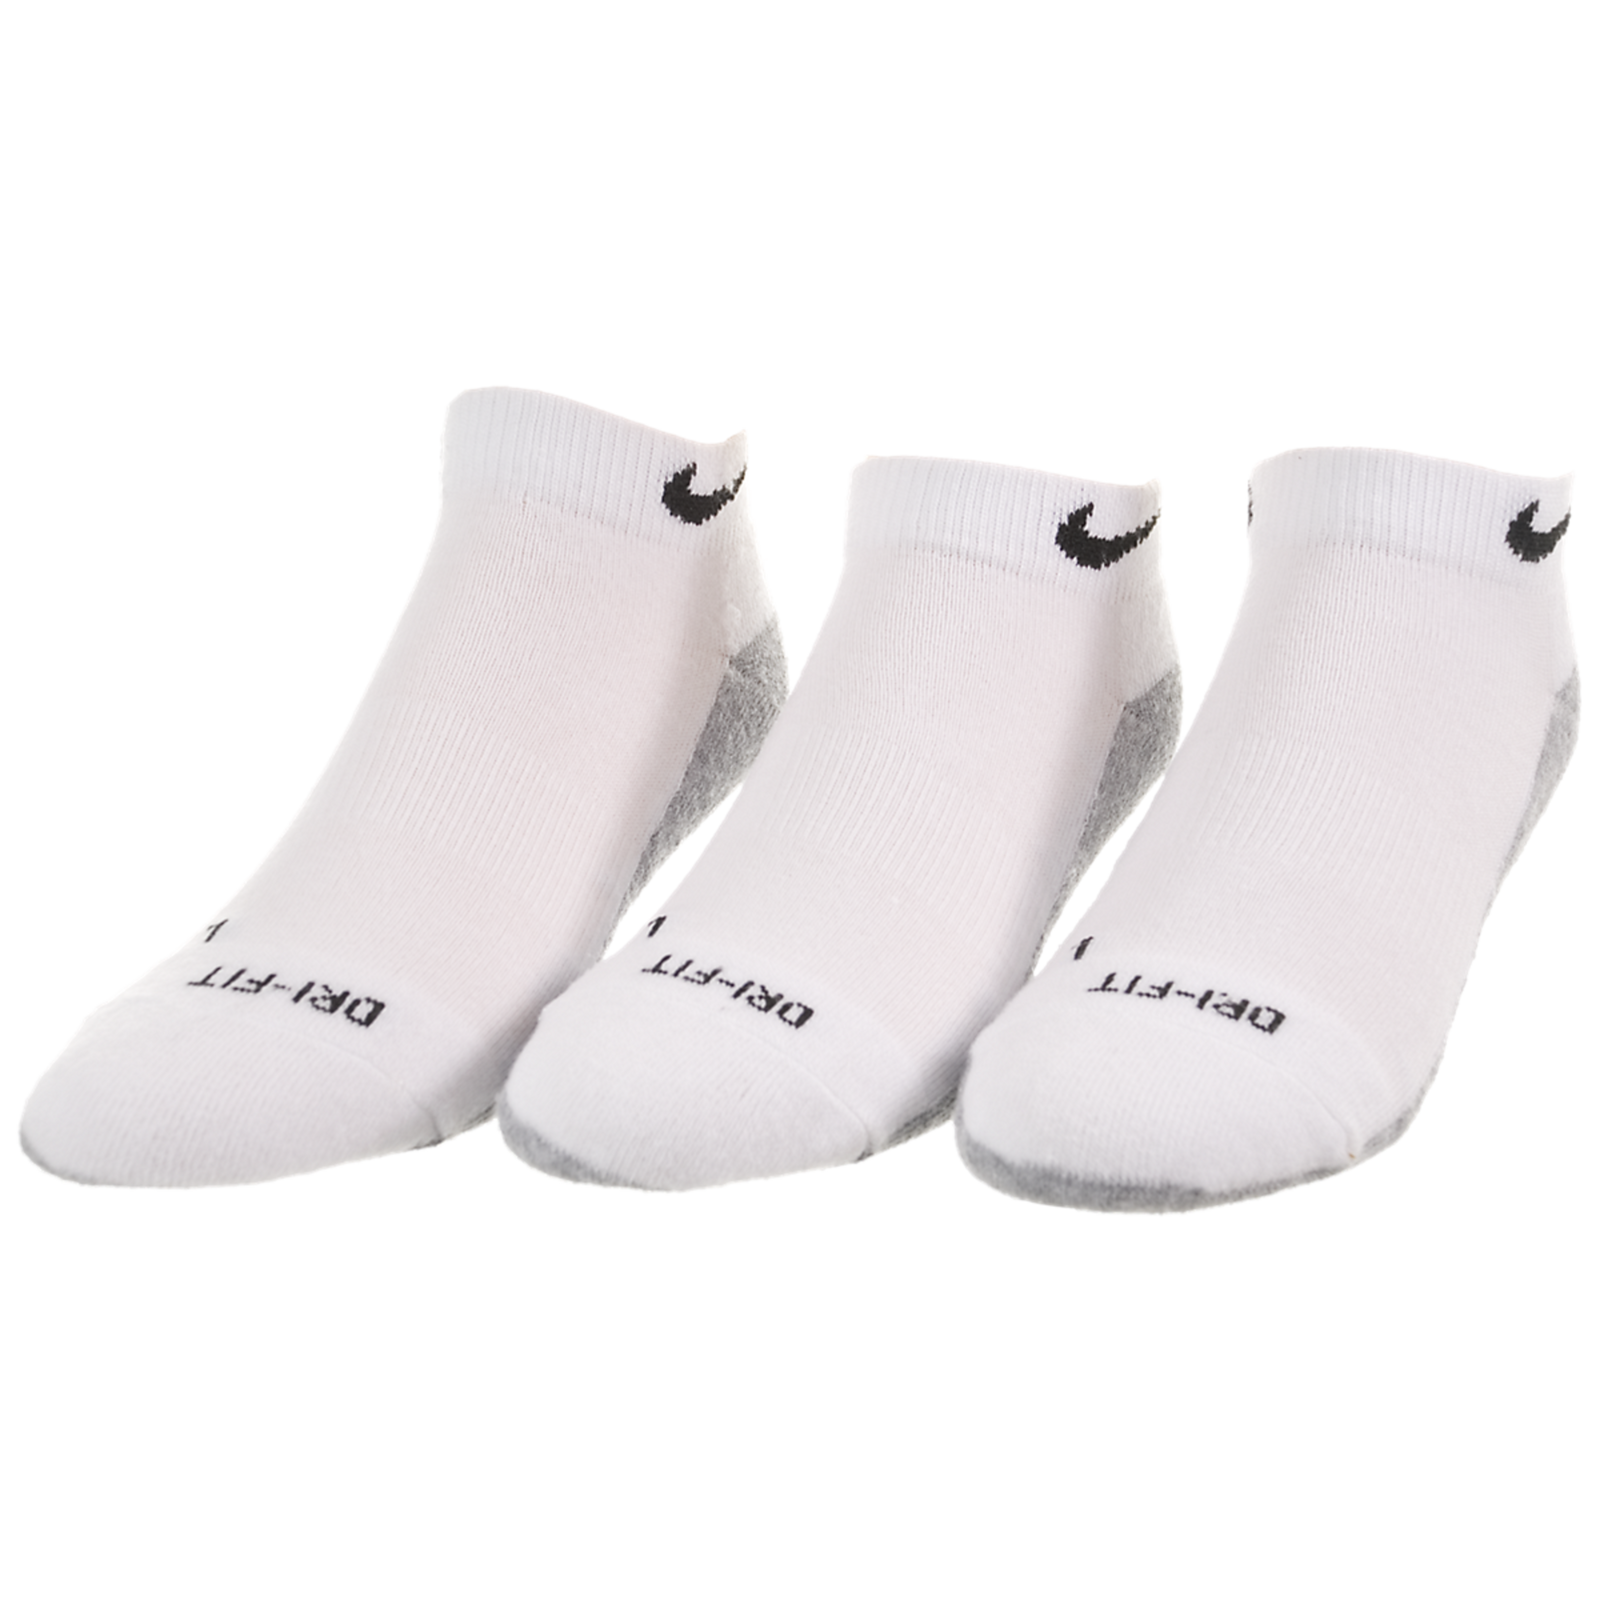 Nike Fit Dry Low Cut Socks (3 Pack) - sx3378-101 - Sneakerhead.com ...